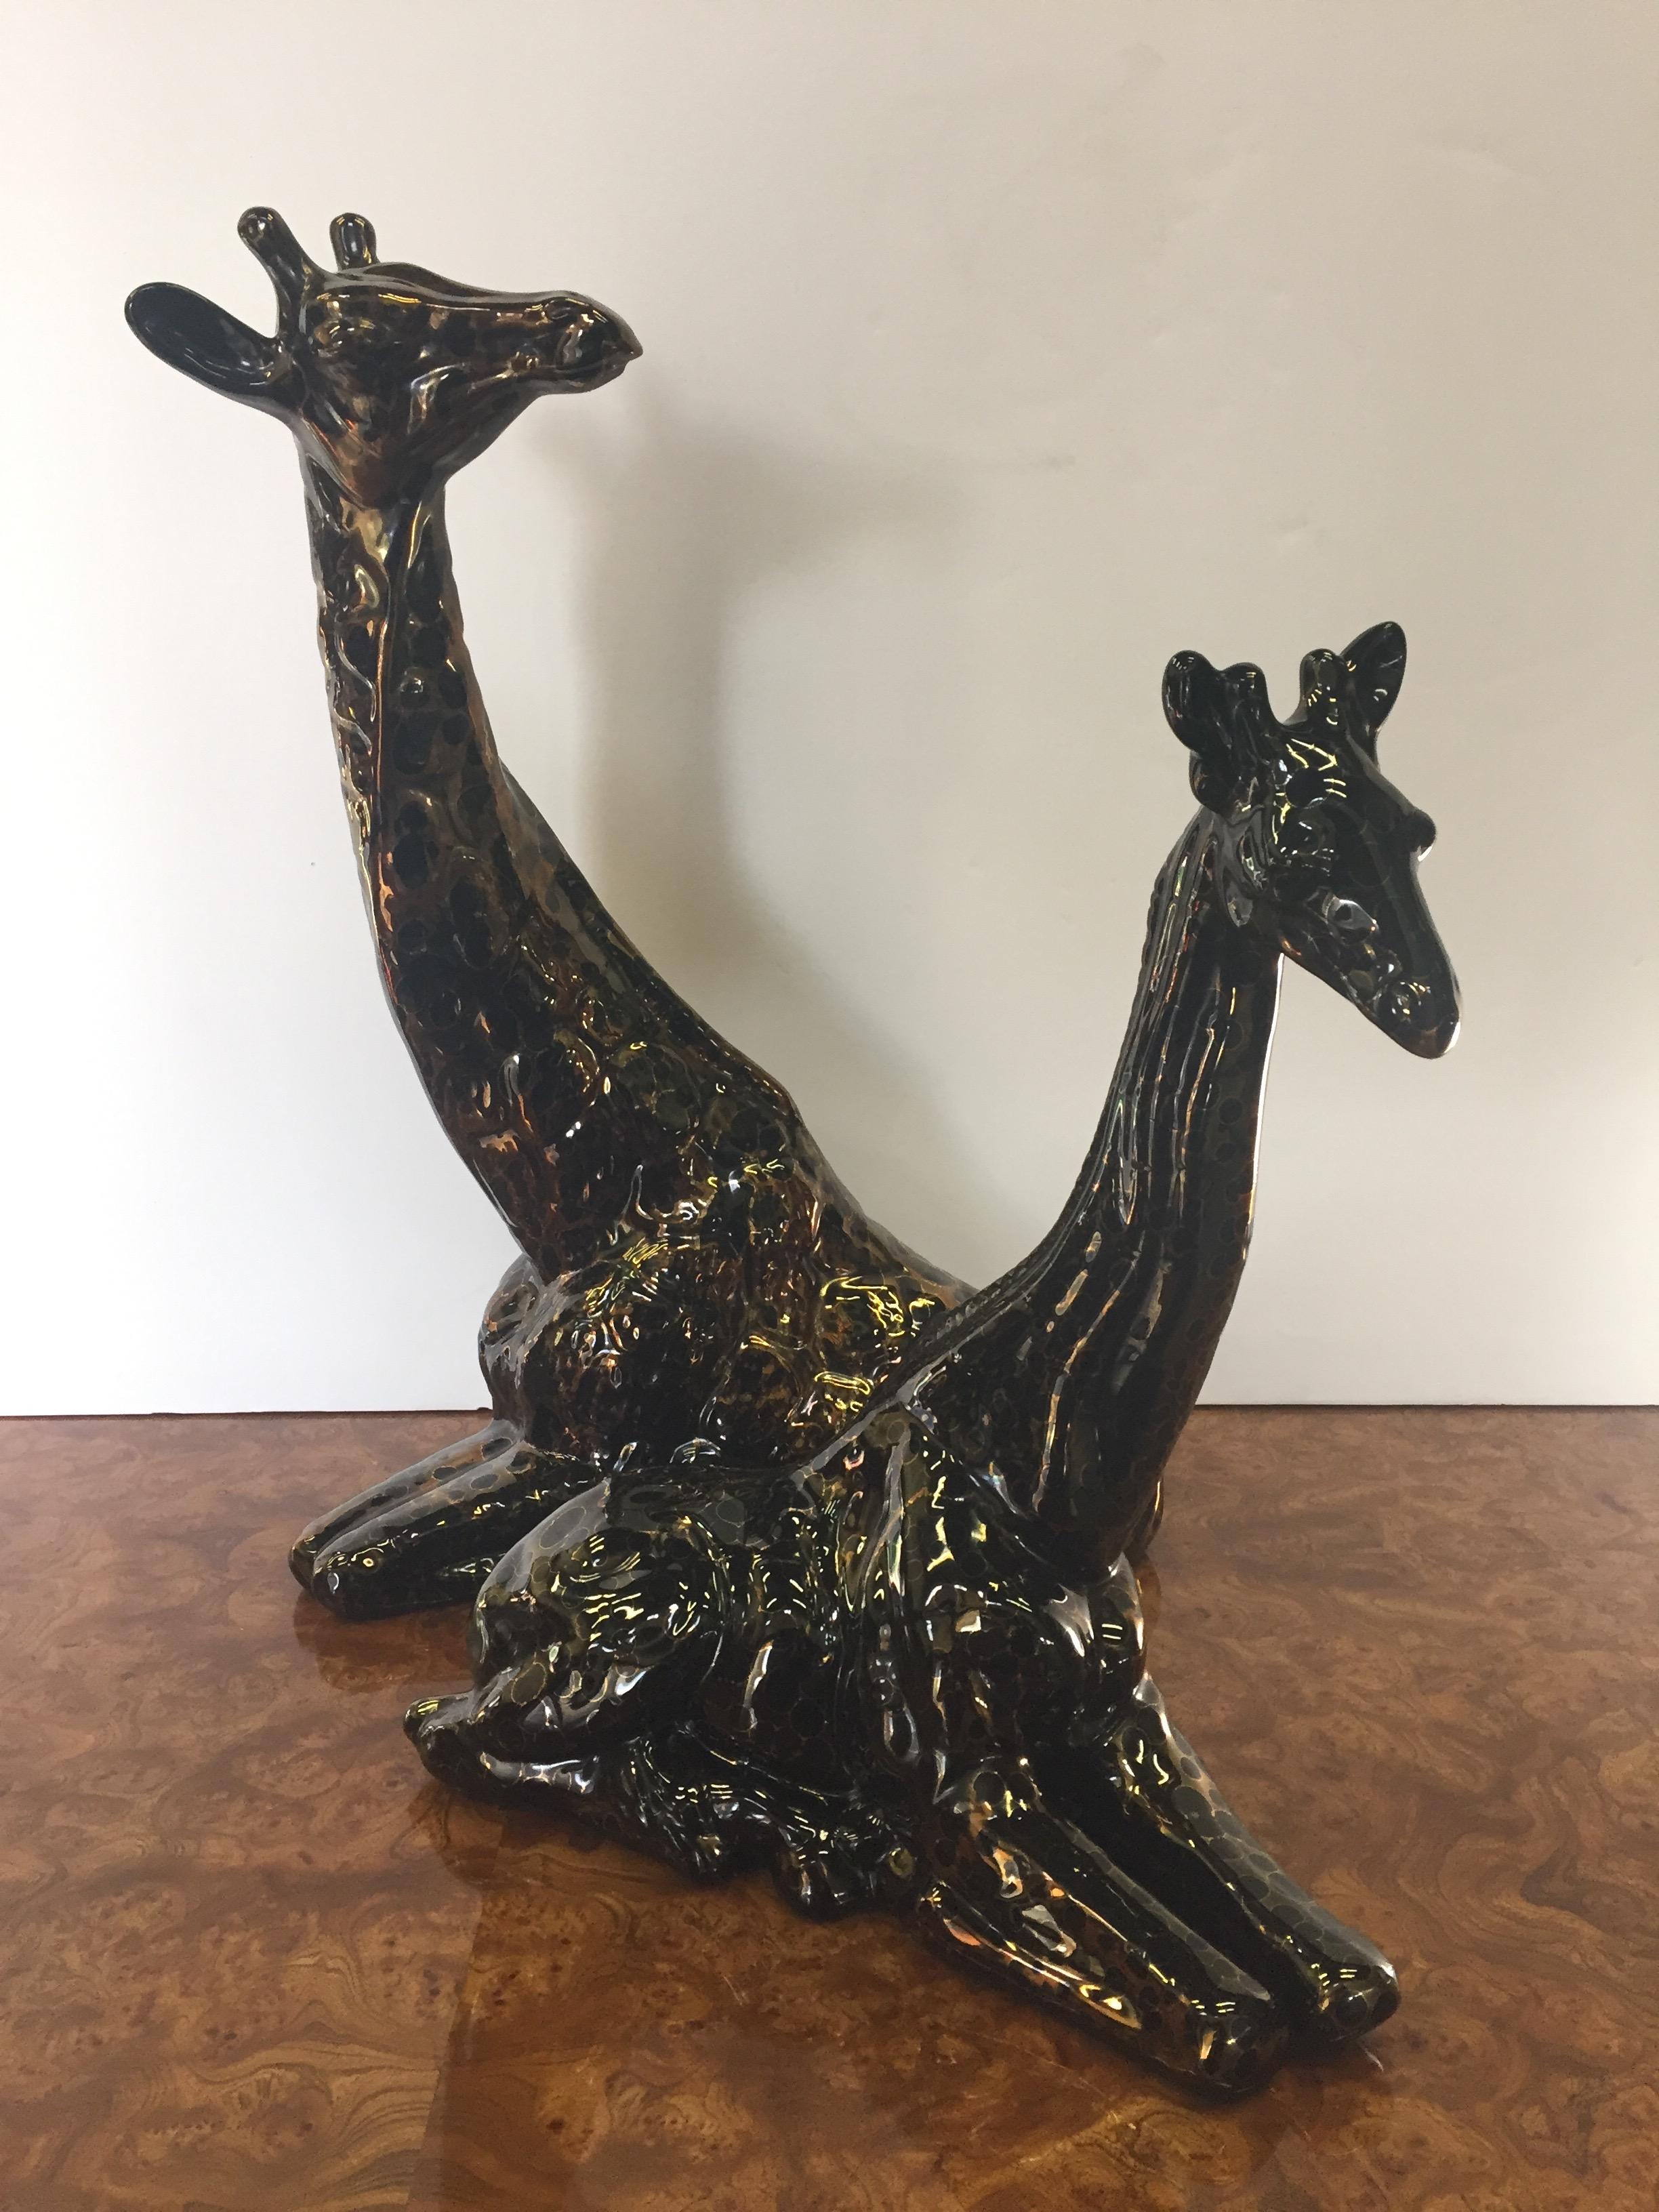 North American Charming Pair of Ceramic Metallic Giraffe Sculptures